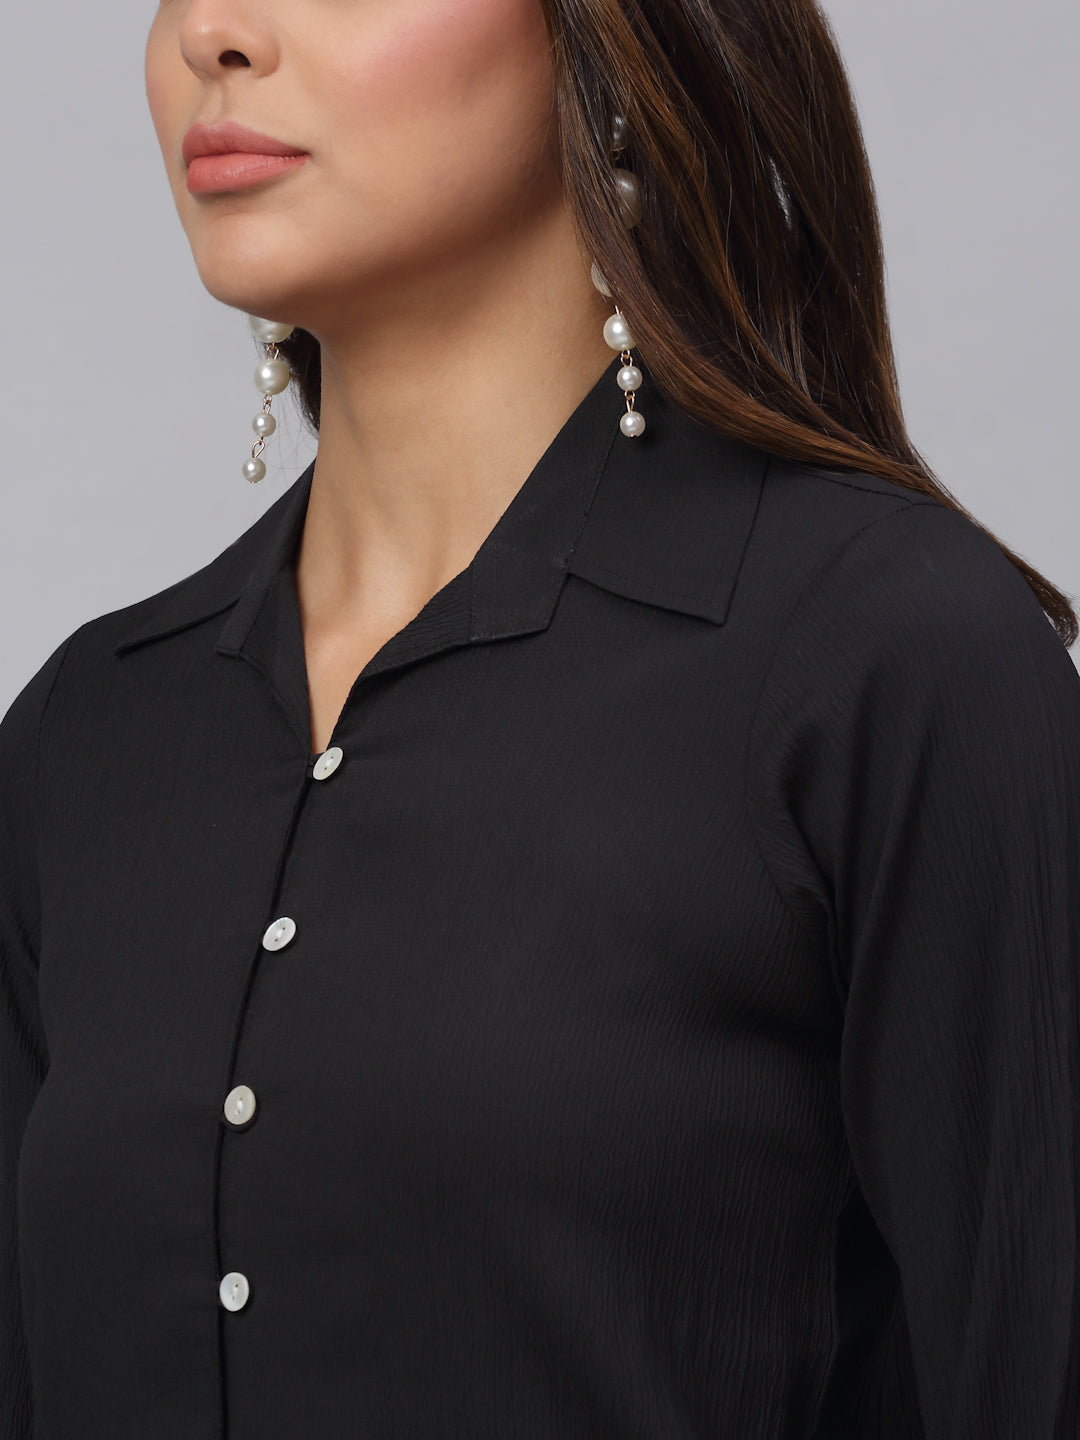 Women Black Solid Shirt